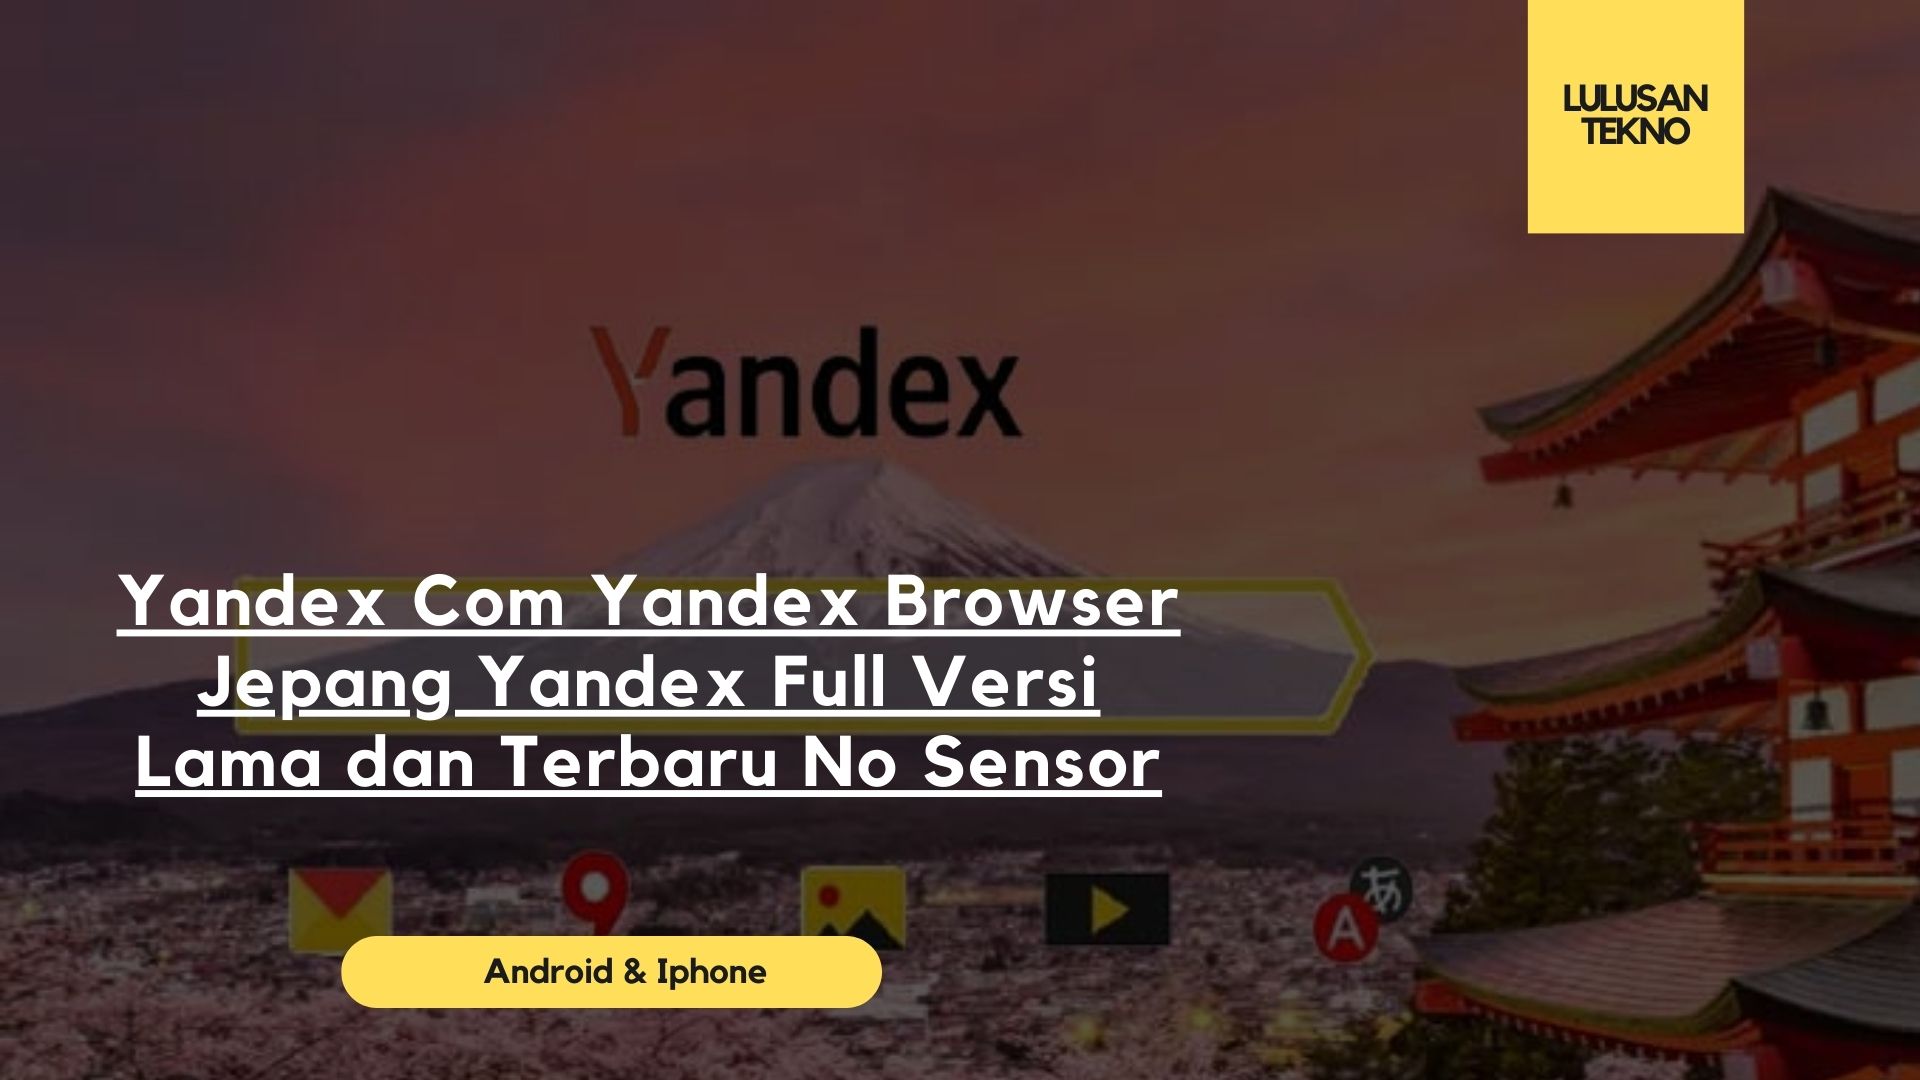 Yandex Com Yandex Browser Jepang Yandex Full Versi Lama dan Terbaru No Sensor